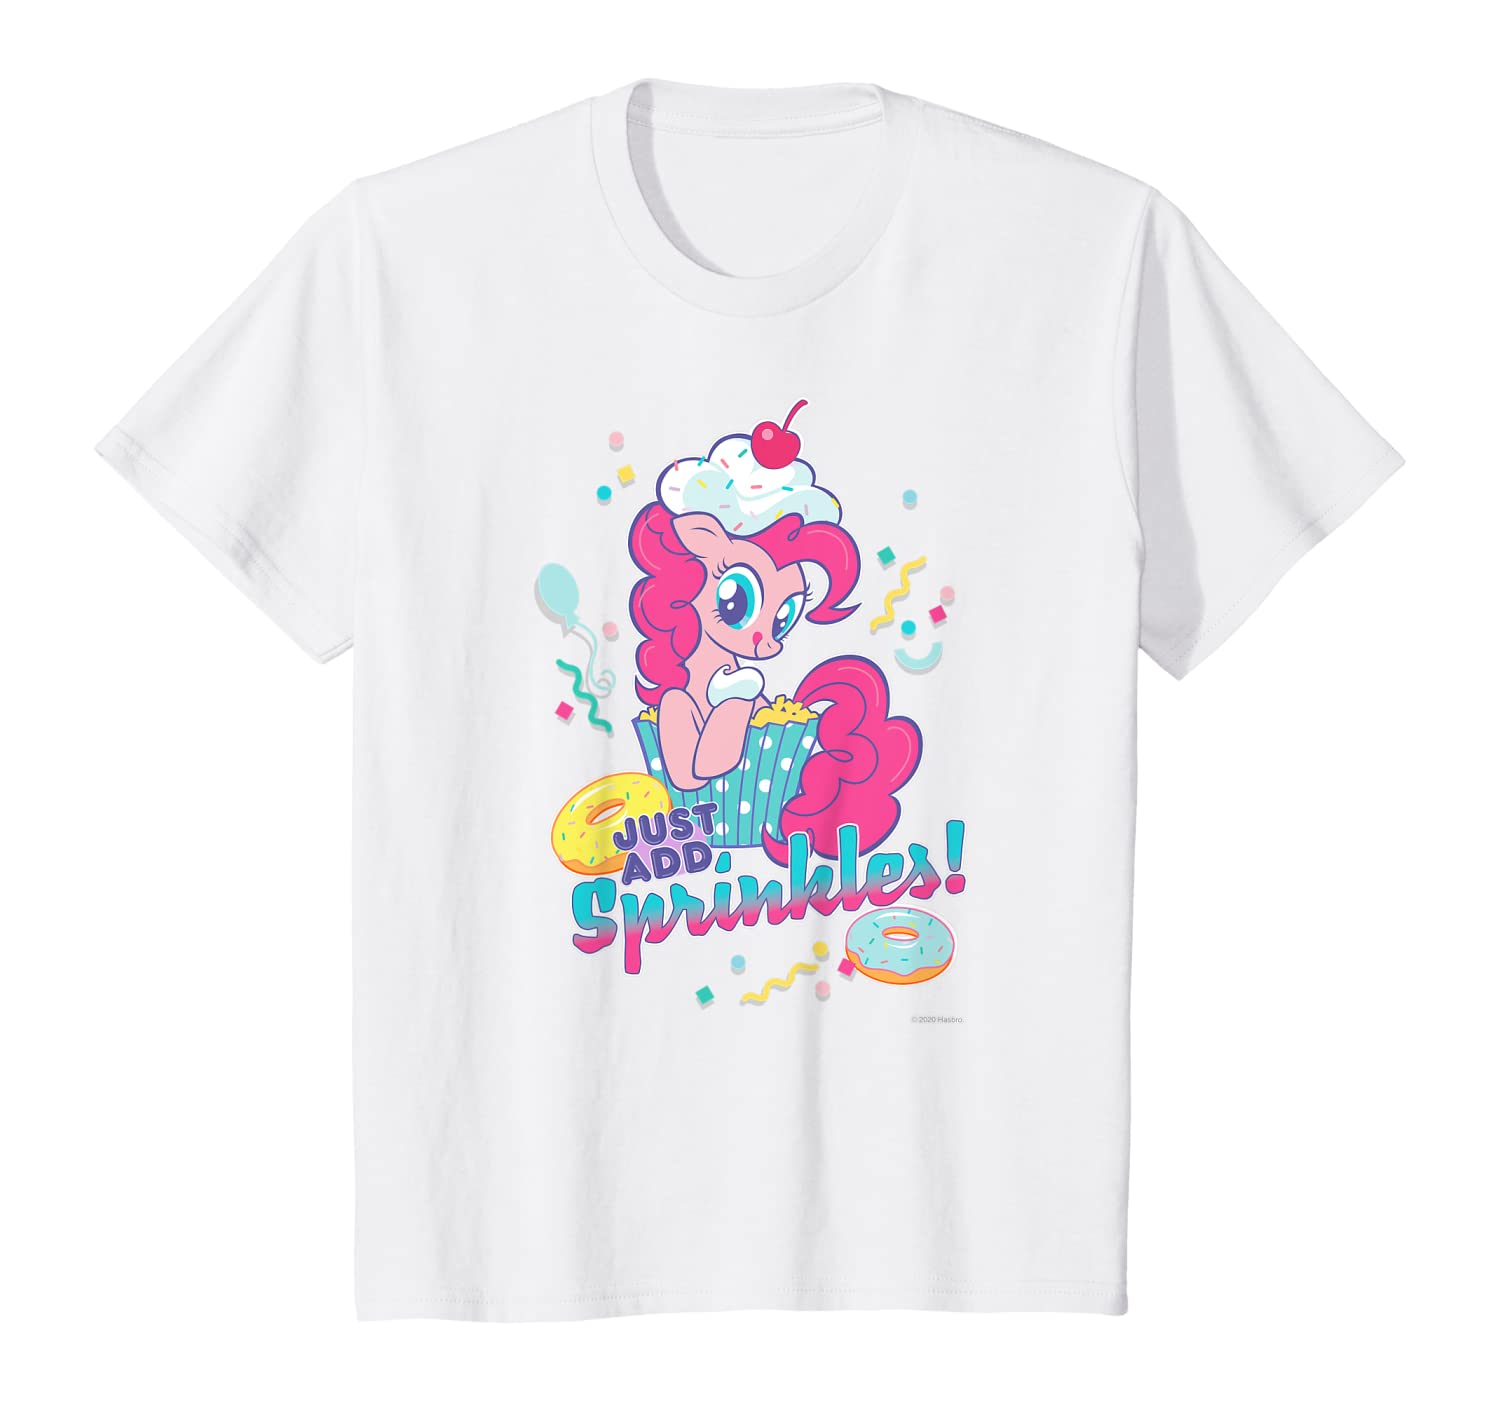 ＜Amazon限定販売＞マイリトルポニー ピンキーパイ"Cupcake with Sprinkles!"カラー